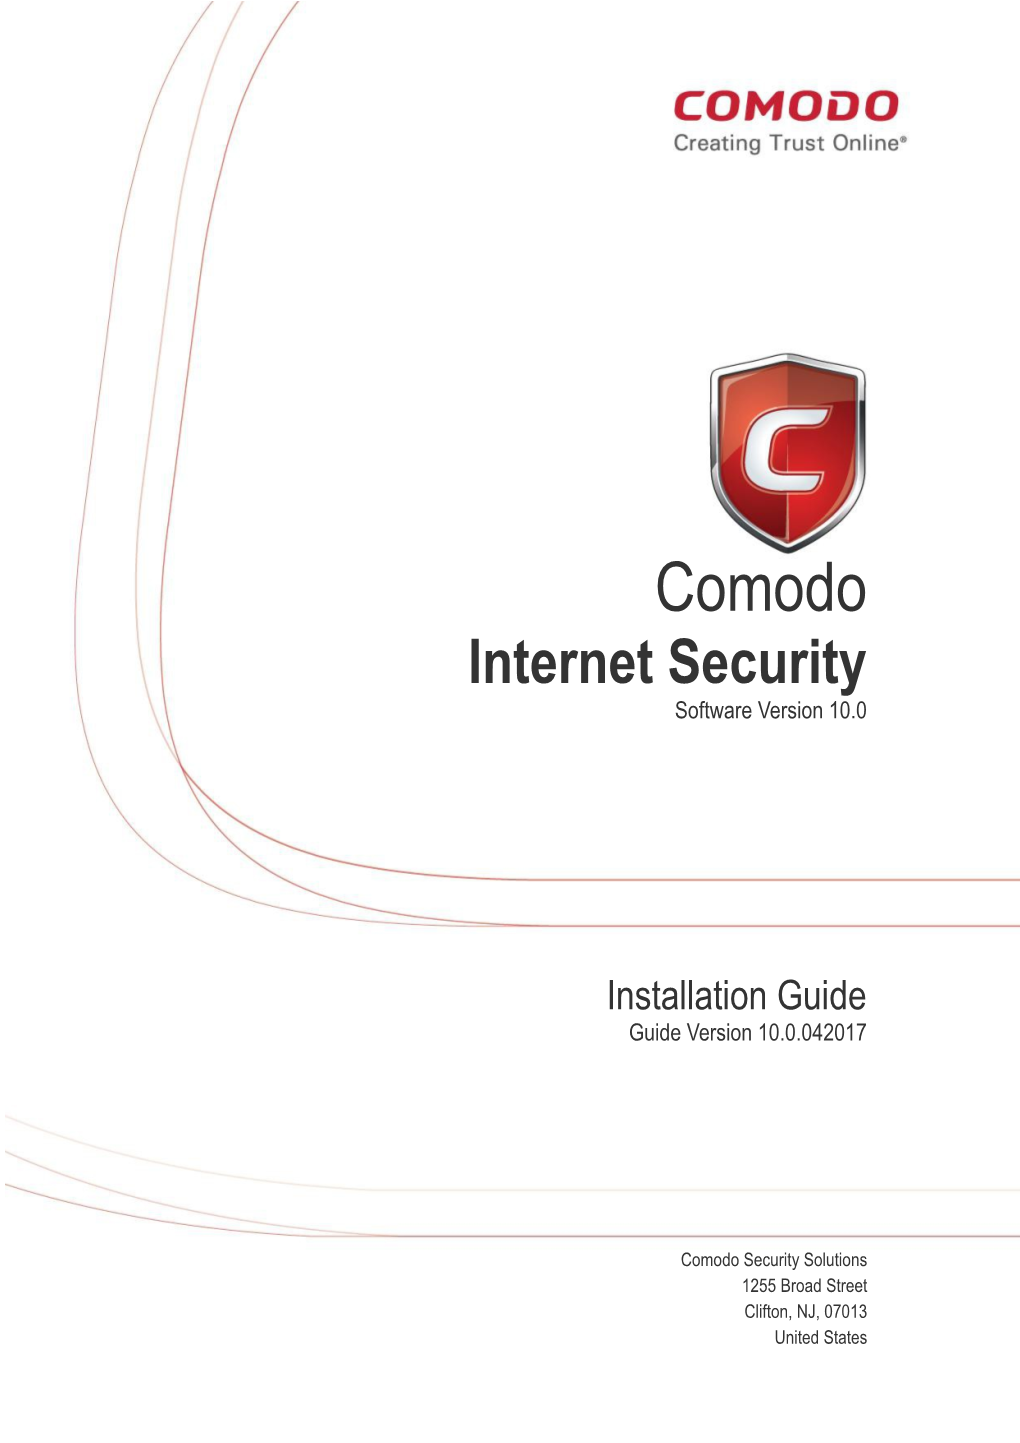 Comodo Internet Security Installation Guide | © 2017 Comodo Security Solutions Inc